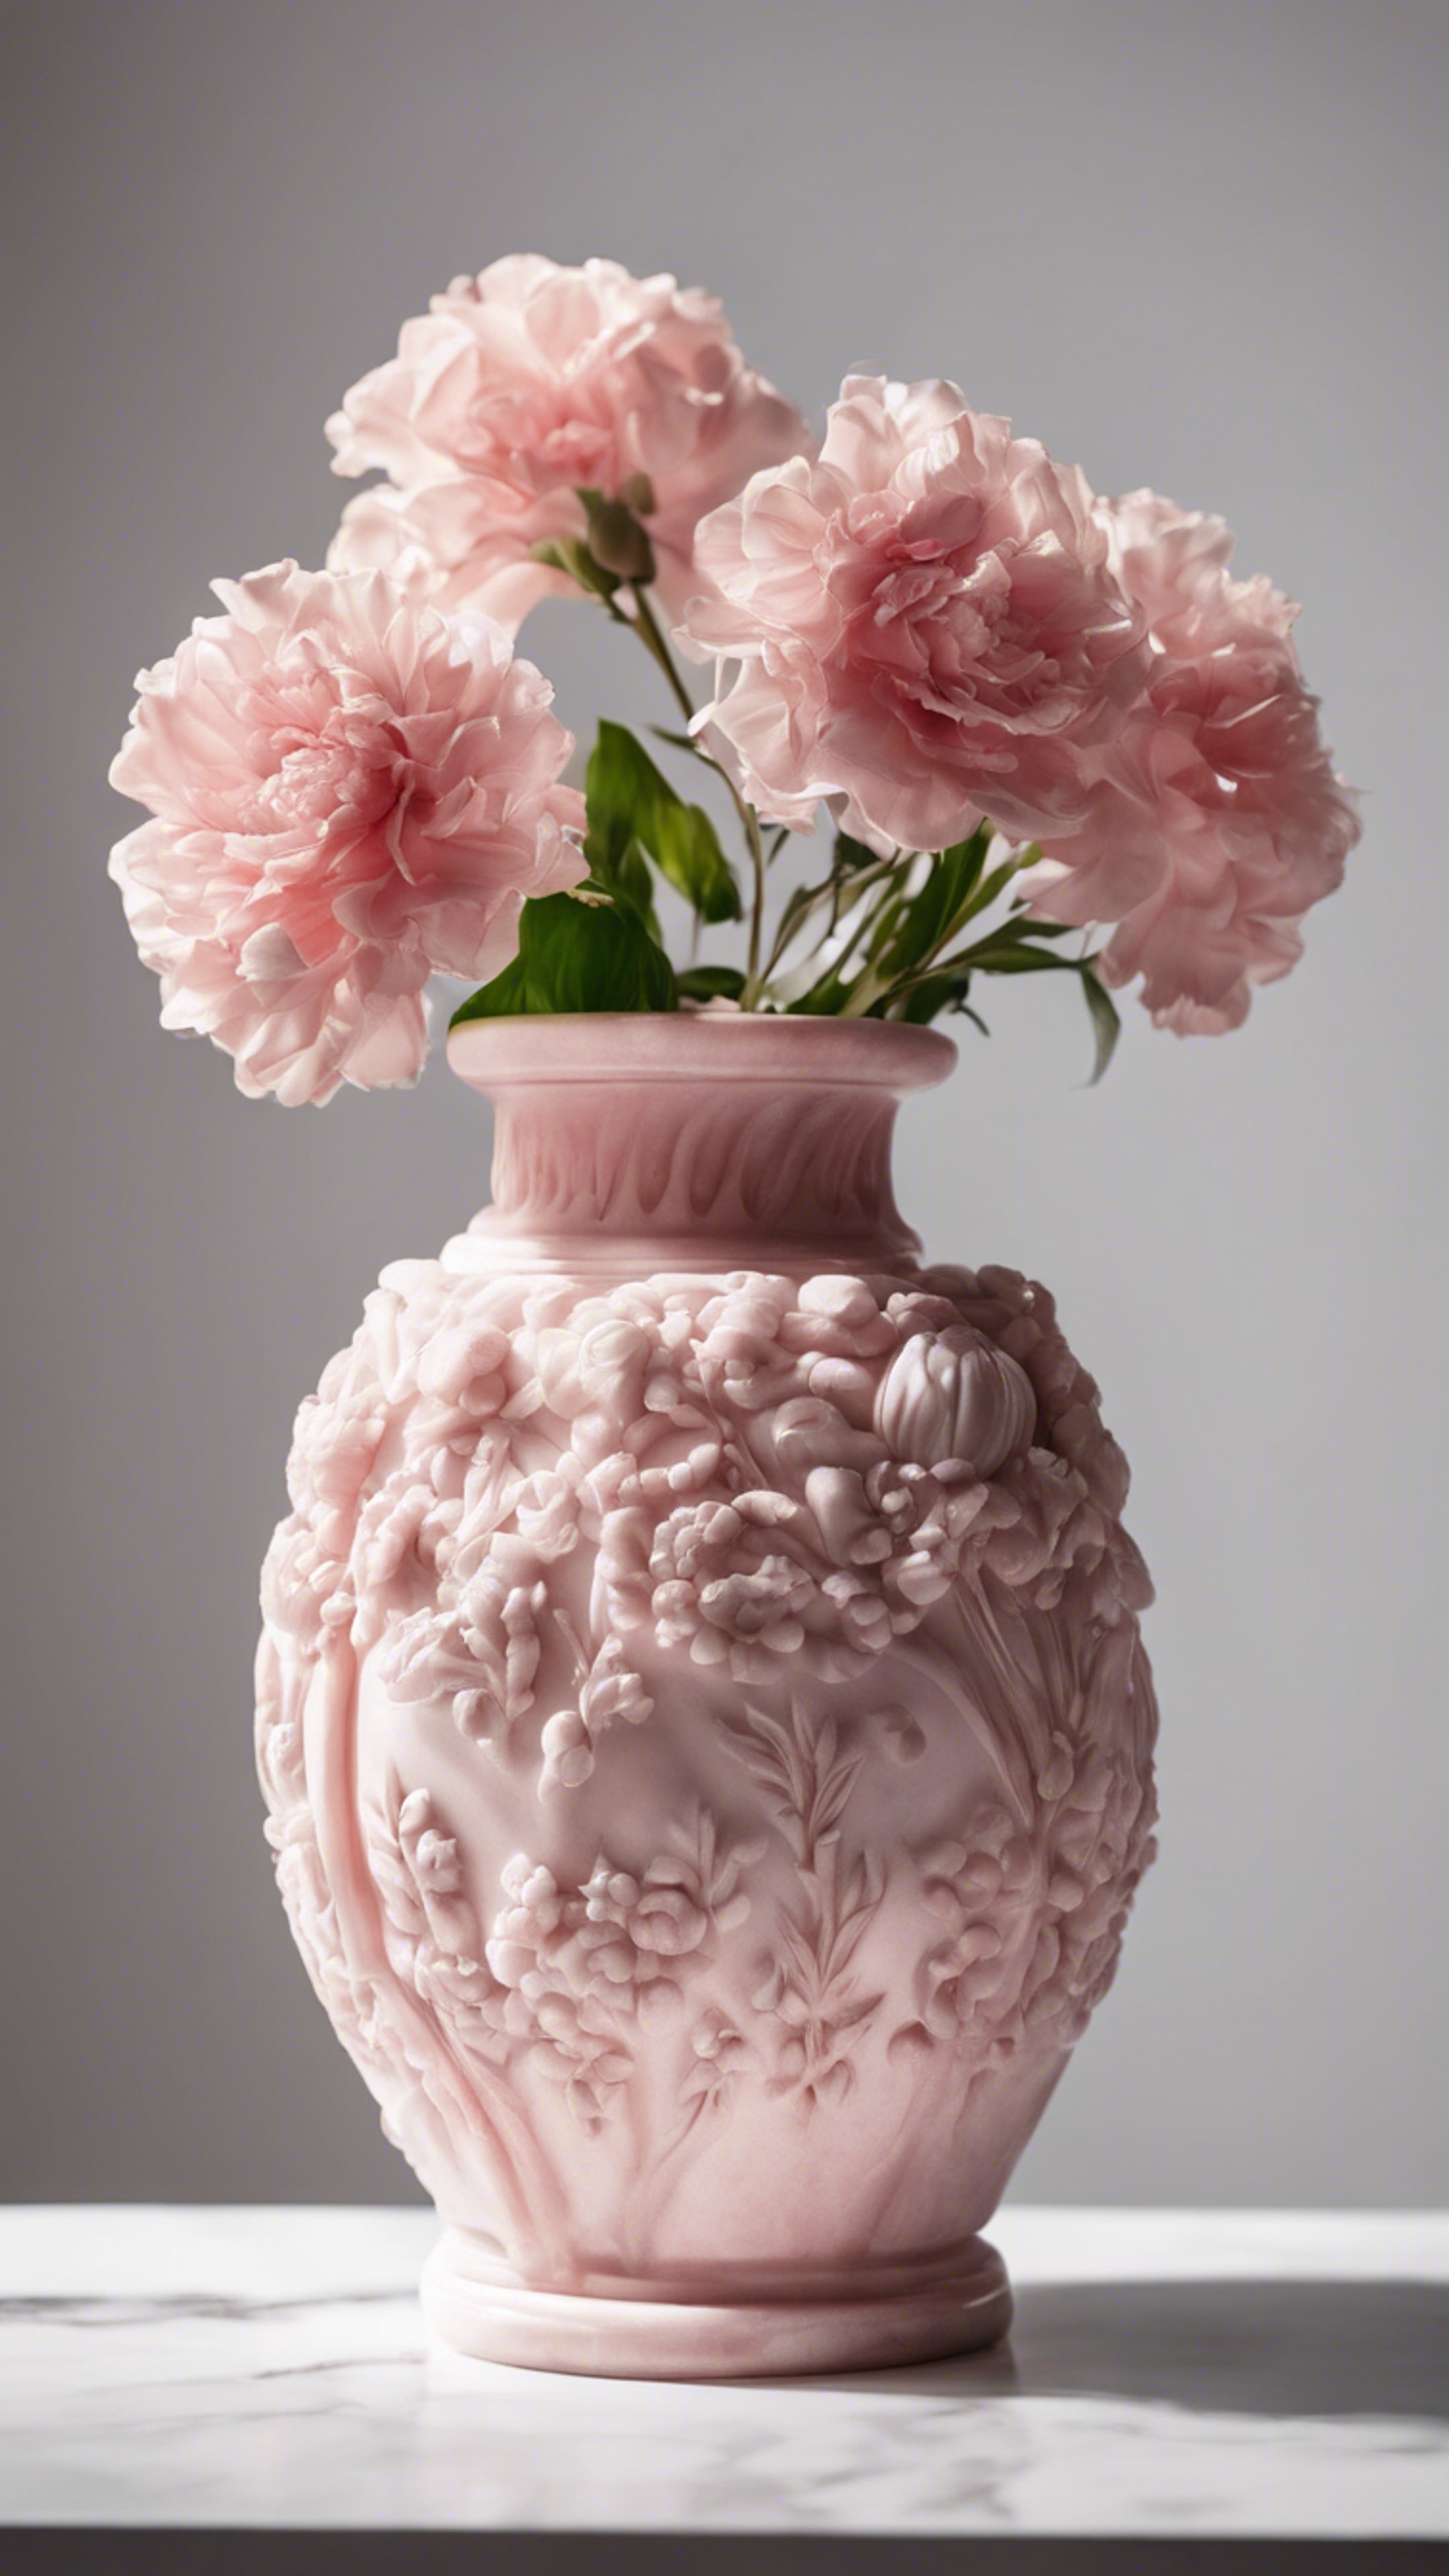 Elegantly carved pink marble flower vase against a white background. Hintergrund[b14a0bd2340d44aeb9d9]